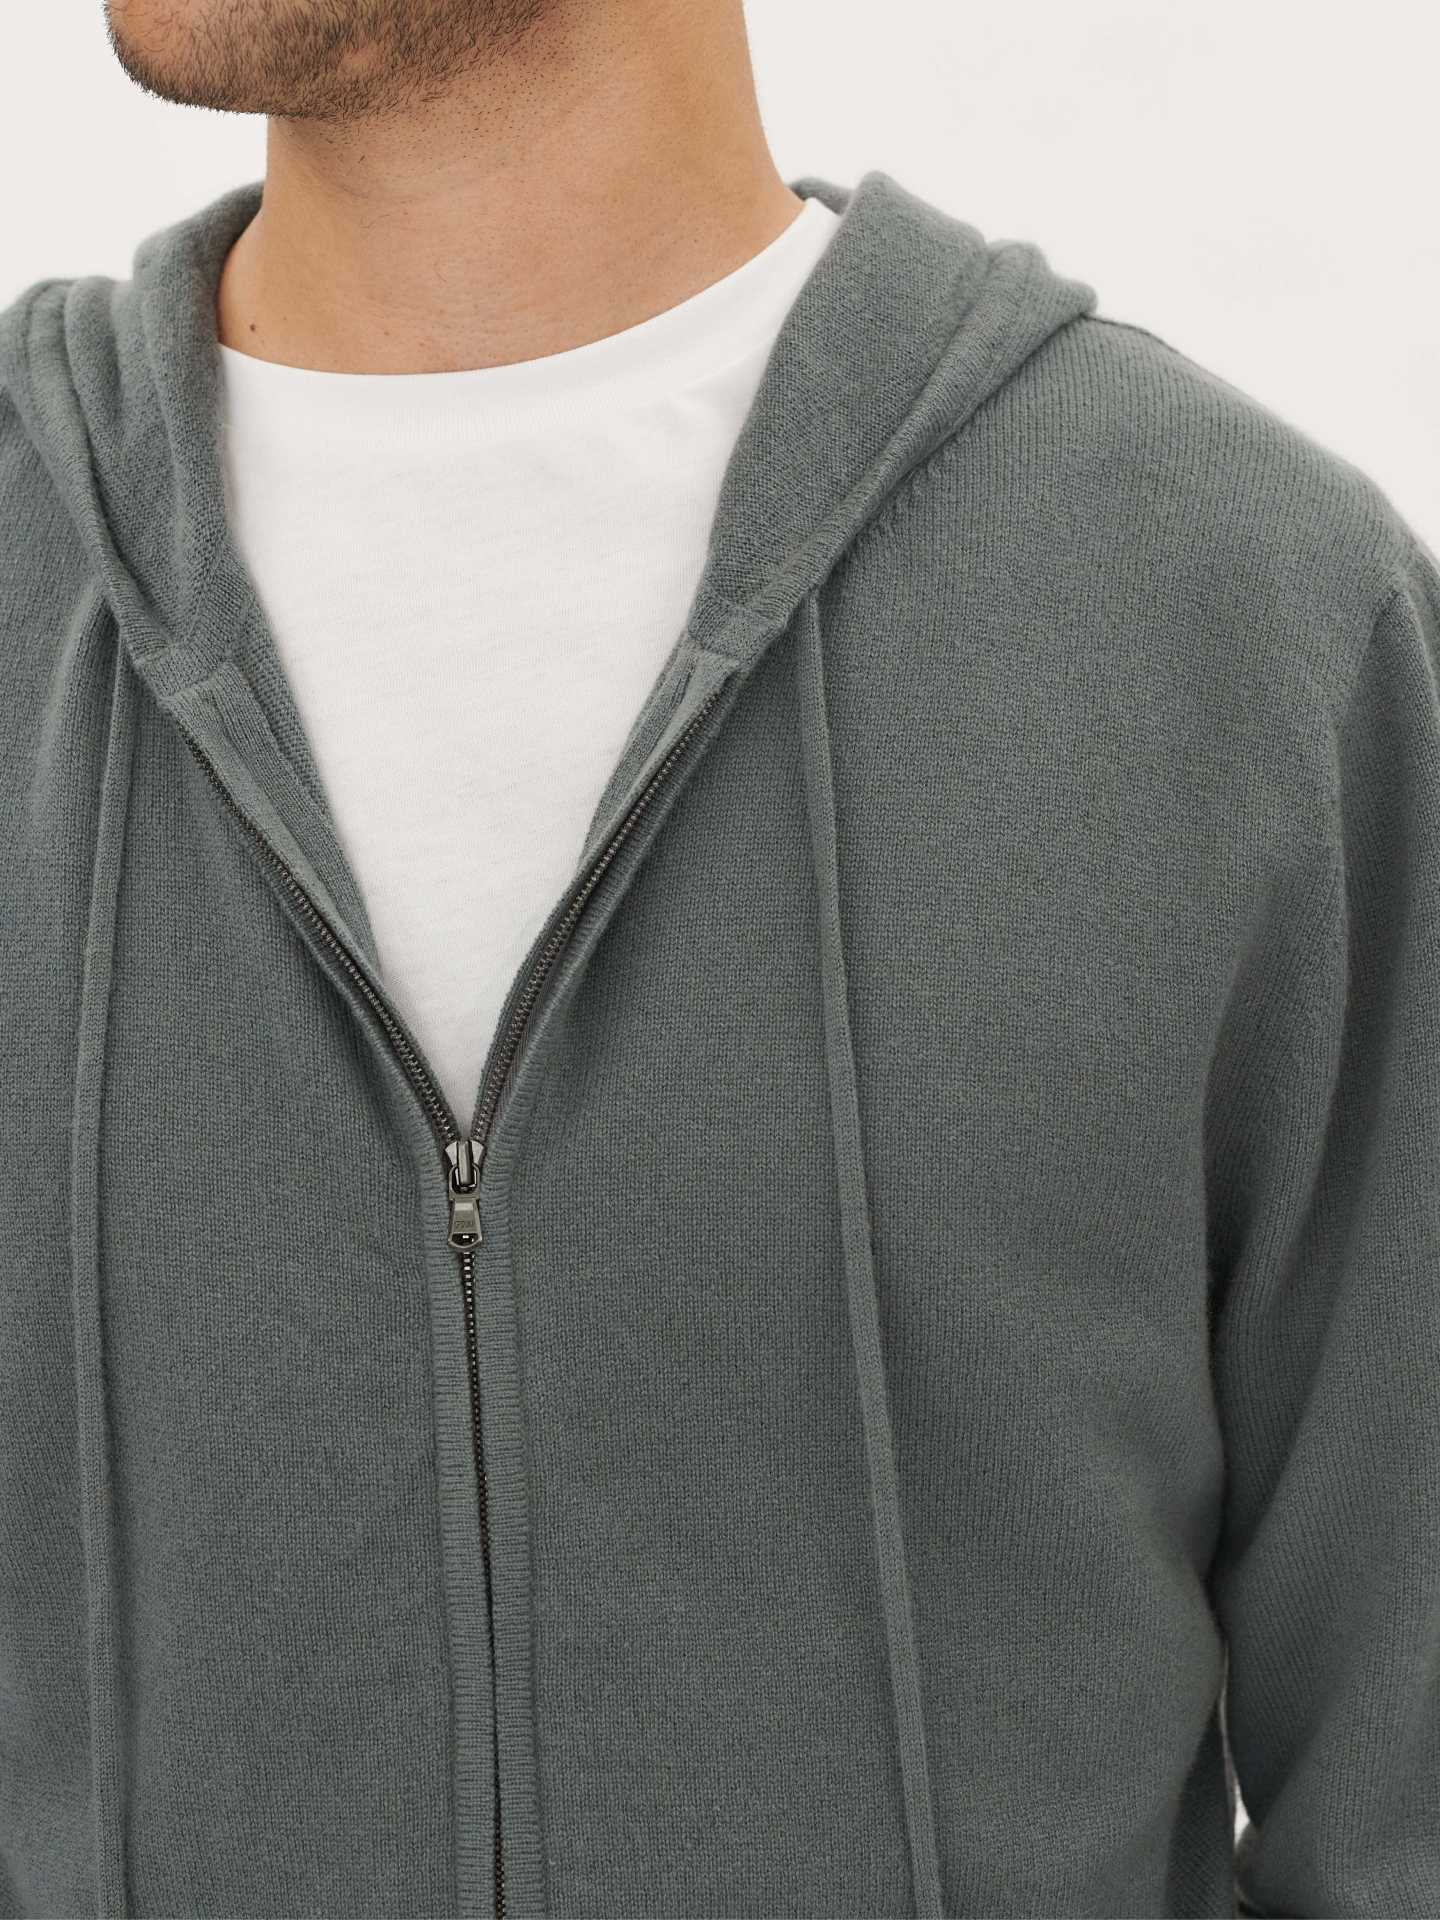 Men's Cashmere Basic Slim Fit Zip Hoodie Neutral Gray - Gobi Cashmere